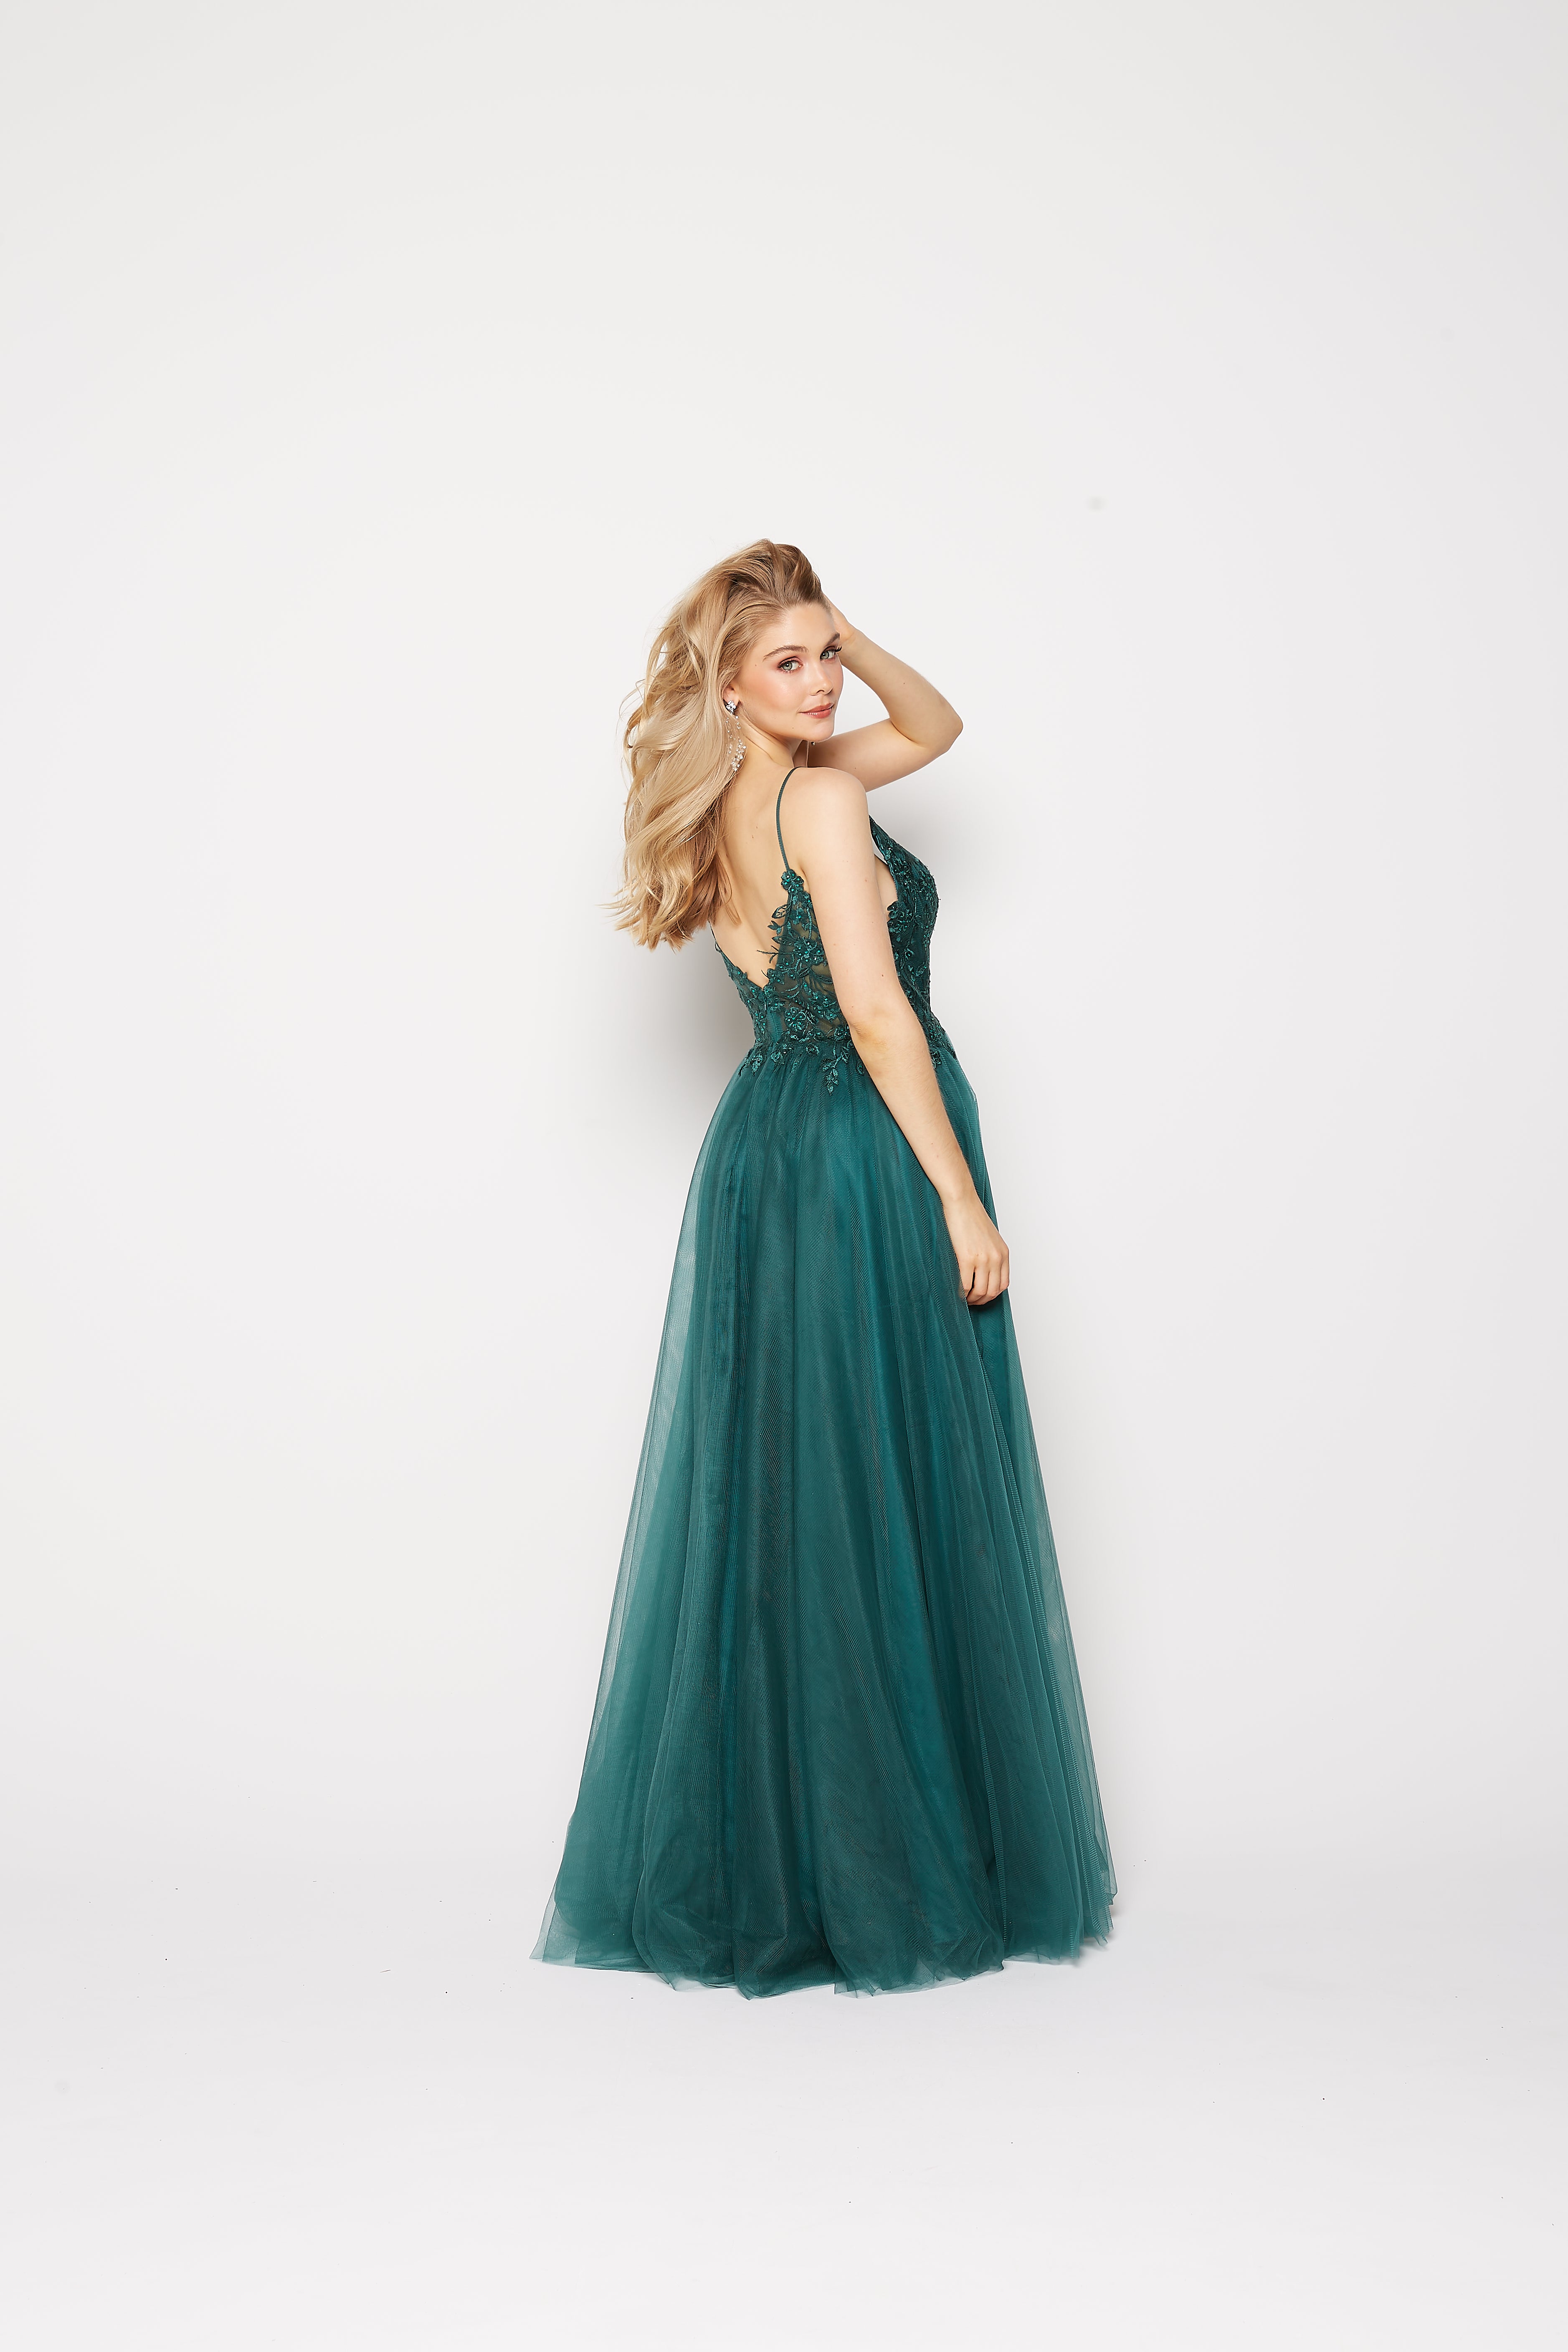 Elsie by Tania Olsen Lilac, Emerald, Blue Formal Dress